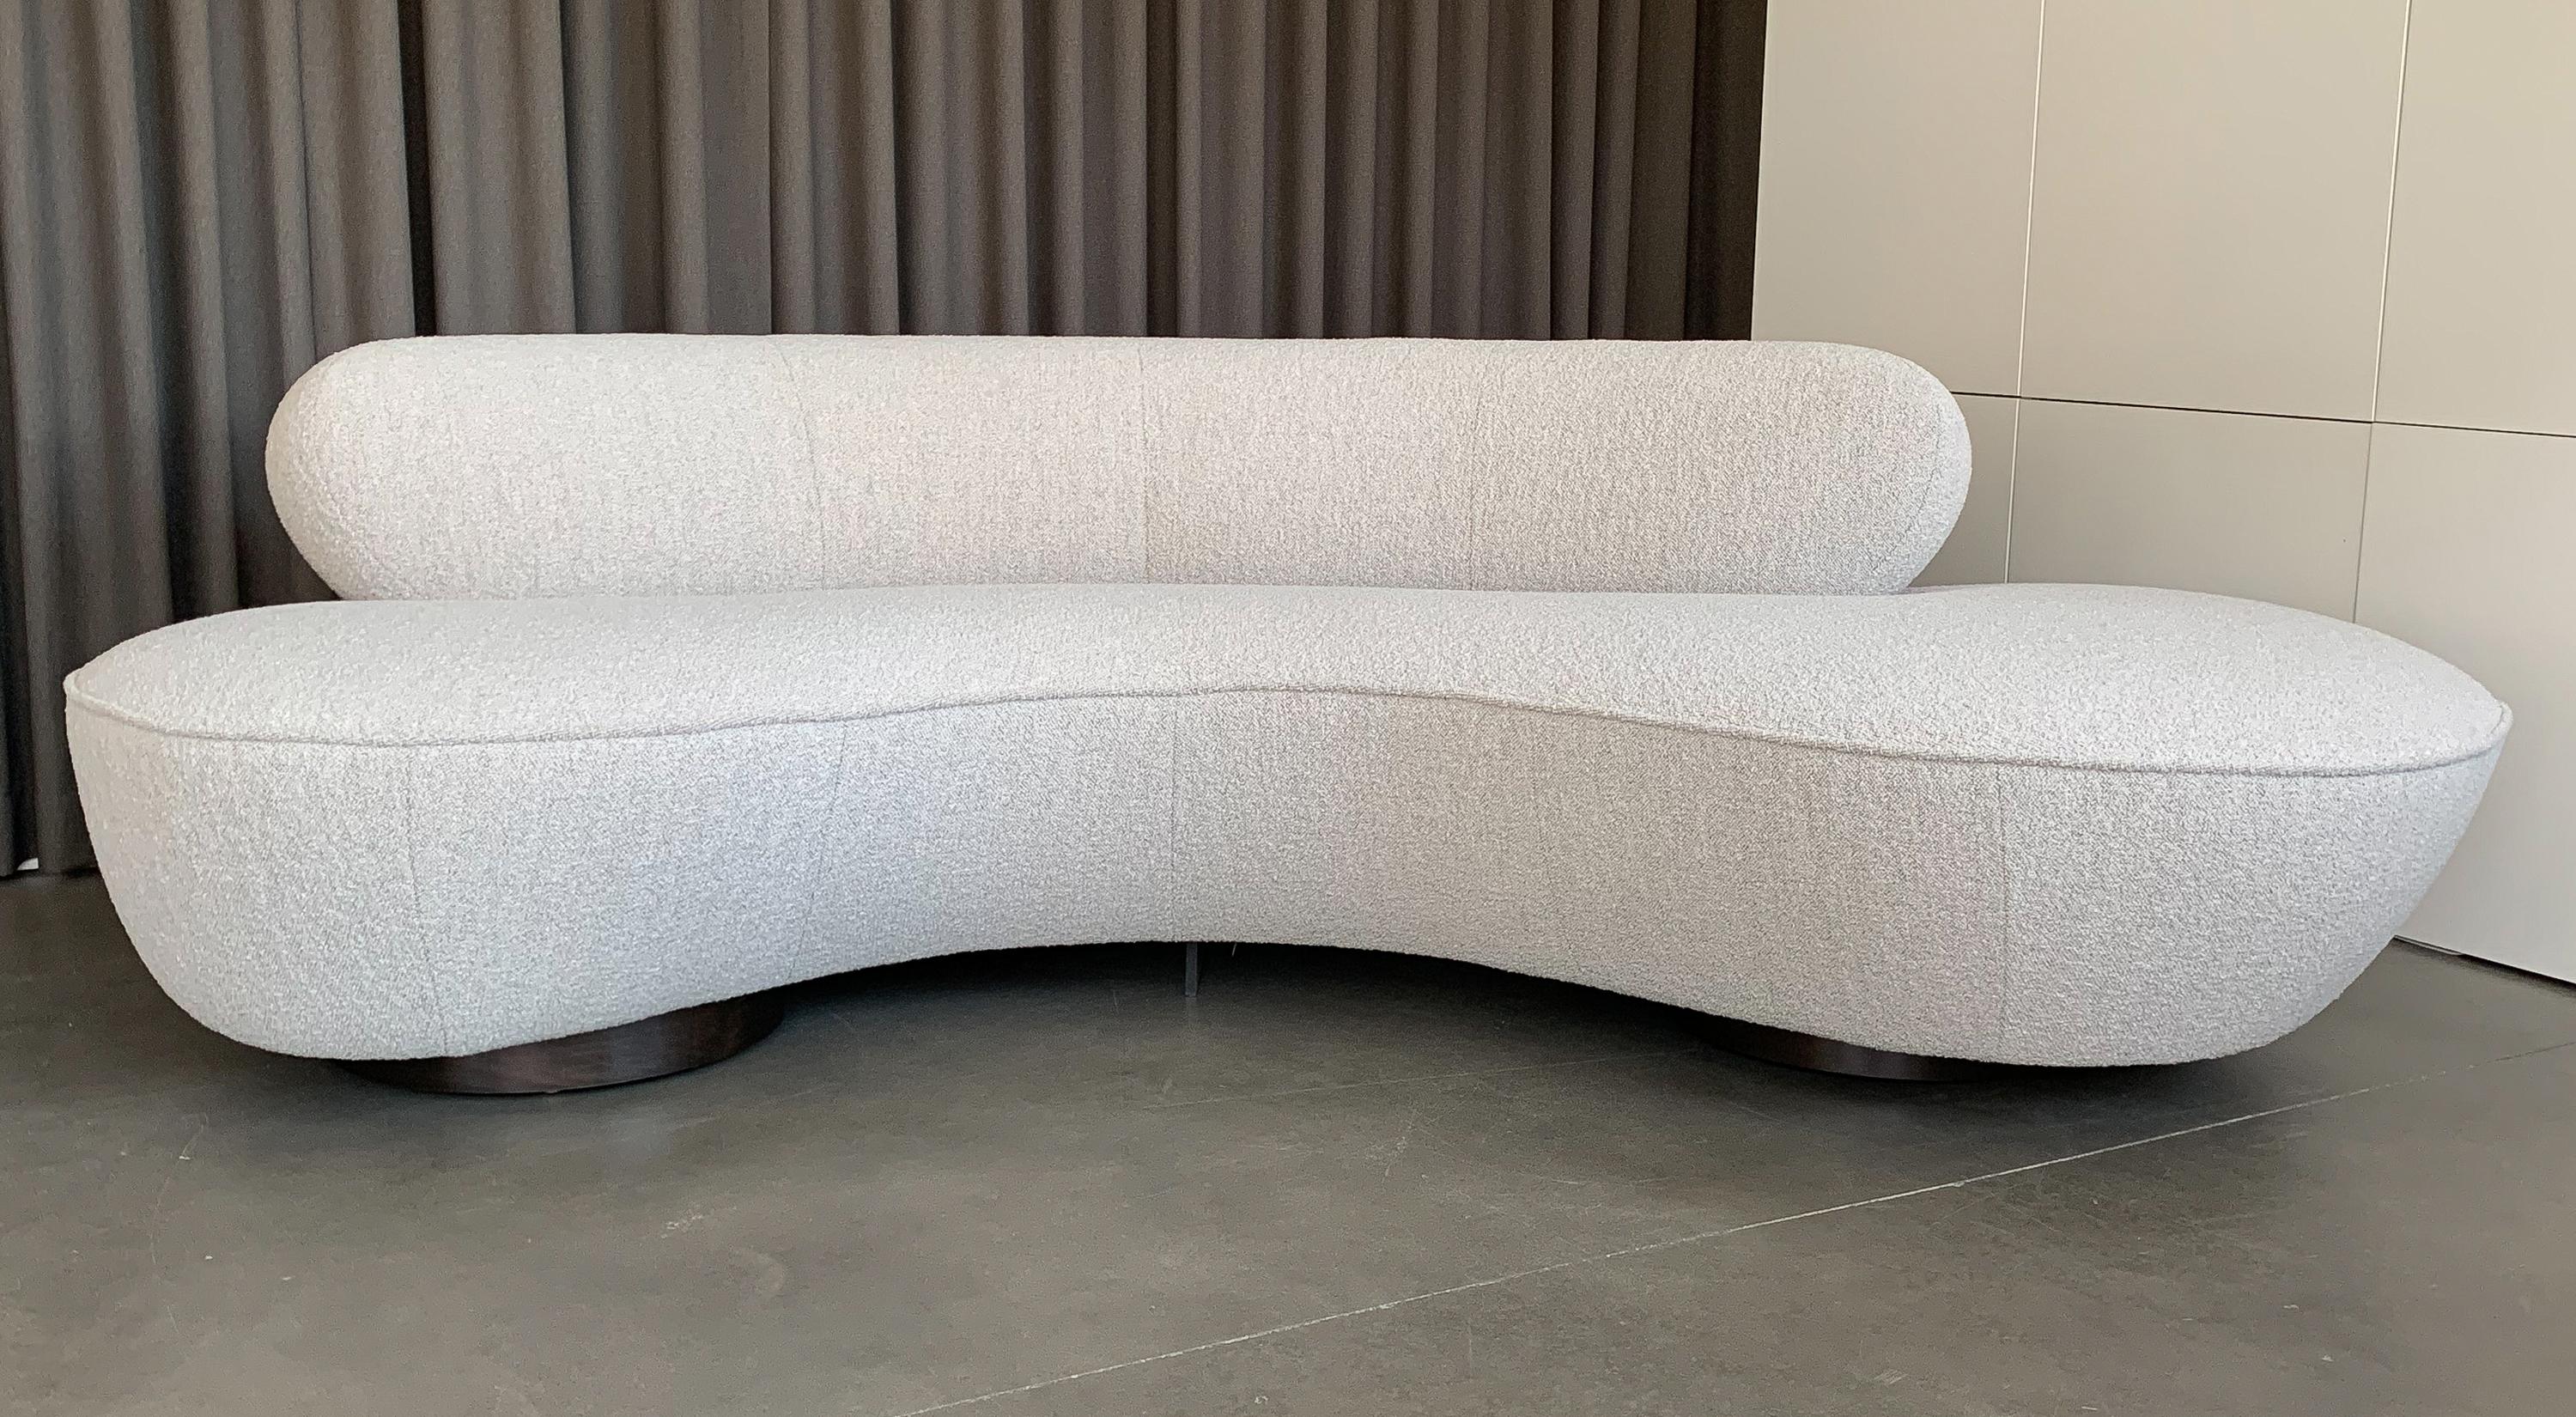 Mid-Century Modern Vladimir Kagan Sofa for Directional